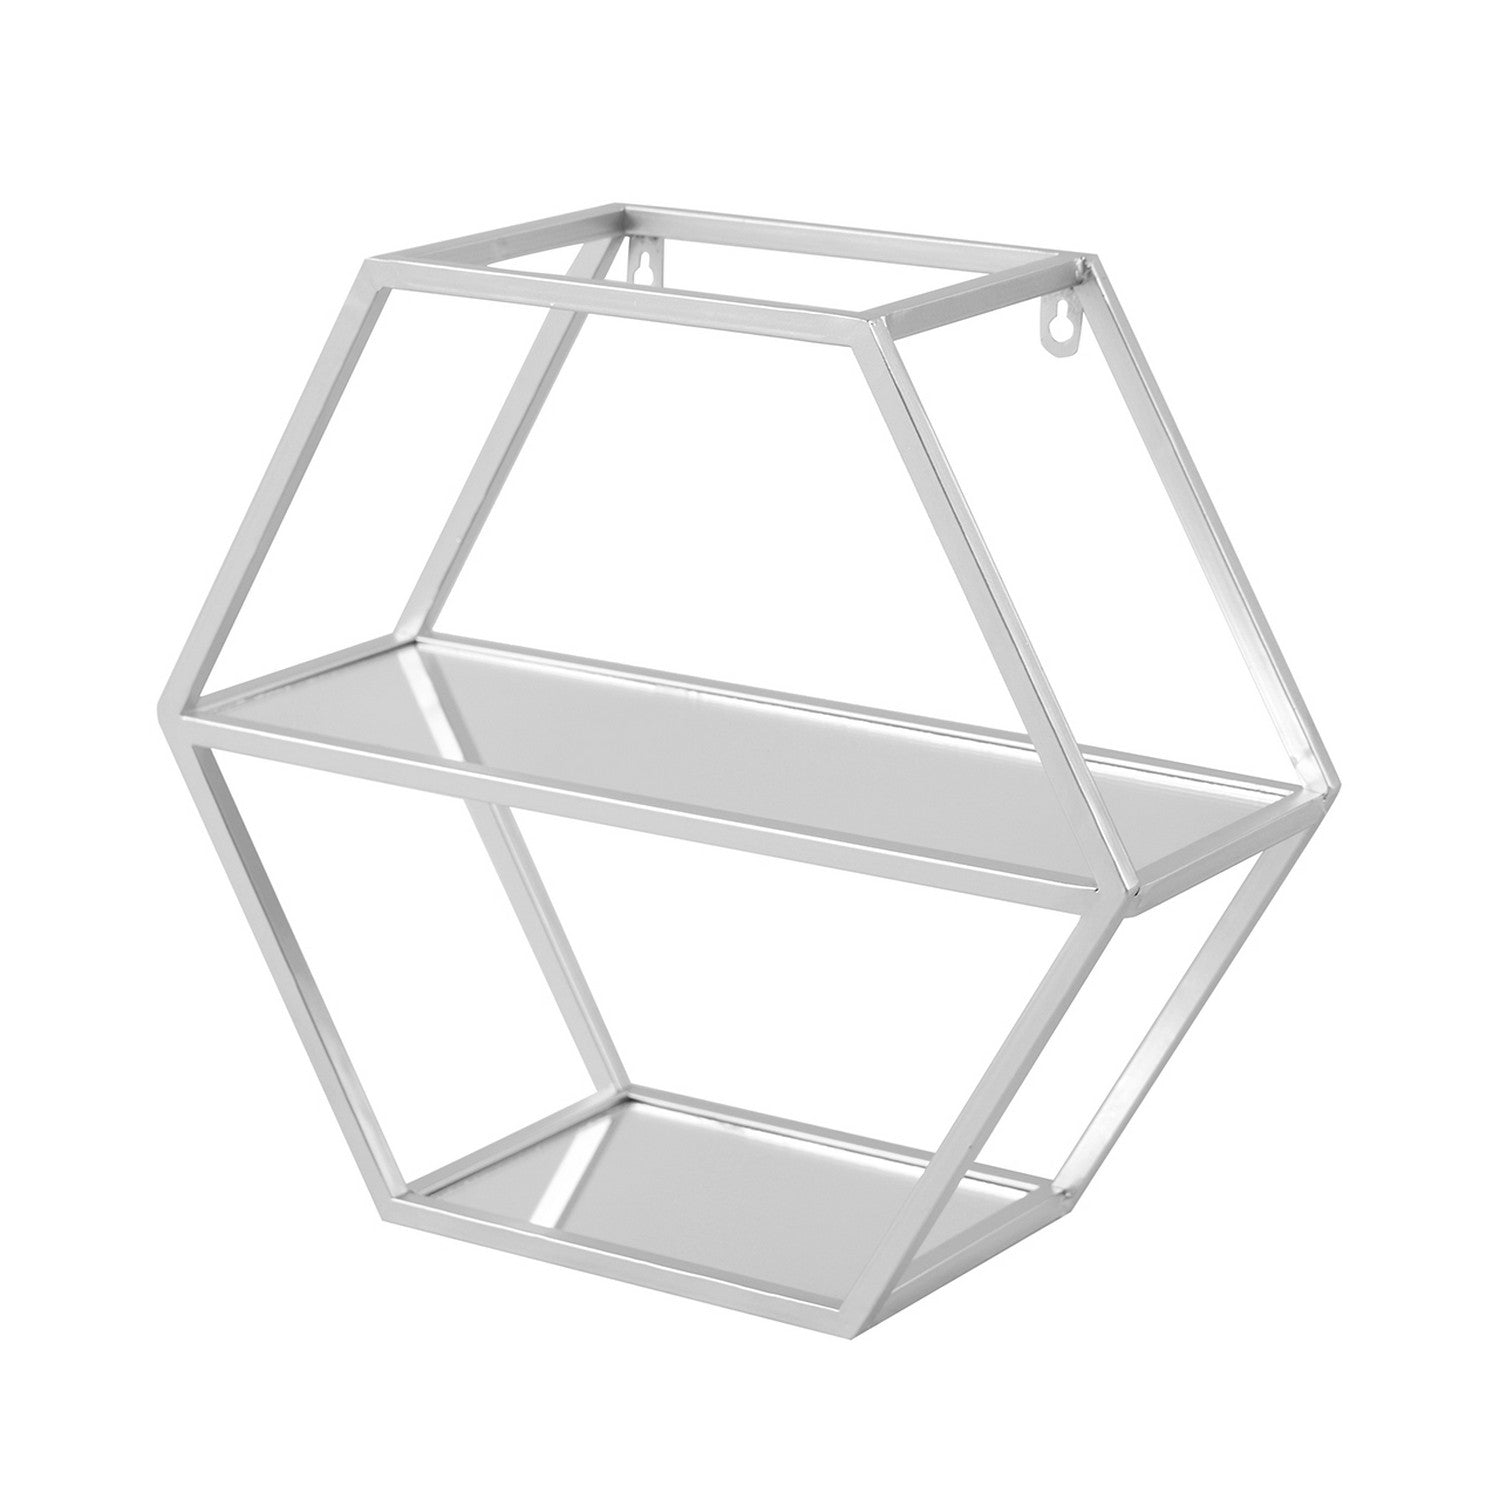 40cm Silver Hexagon Metal Frame Wall Mount with Glass Shelf Display Shelves